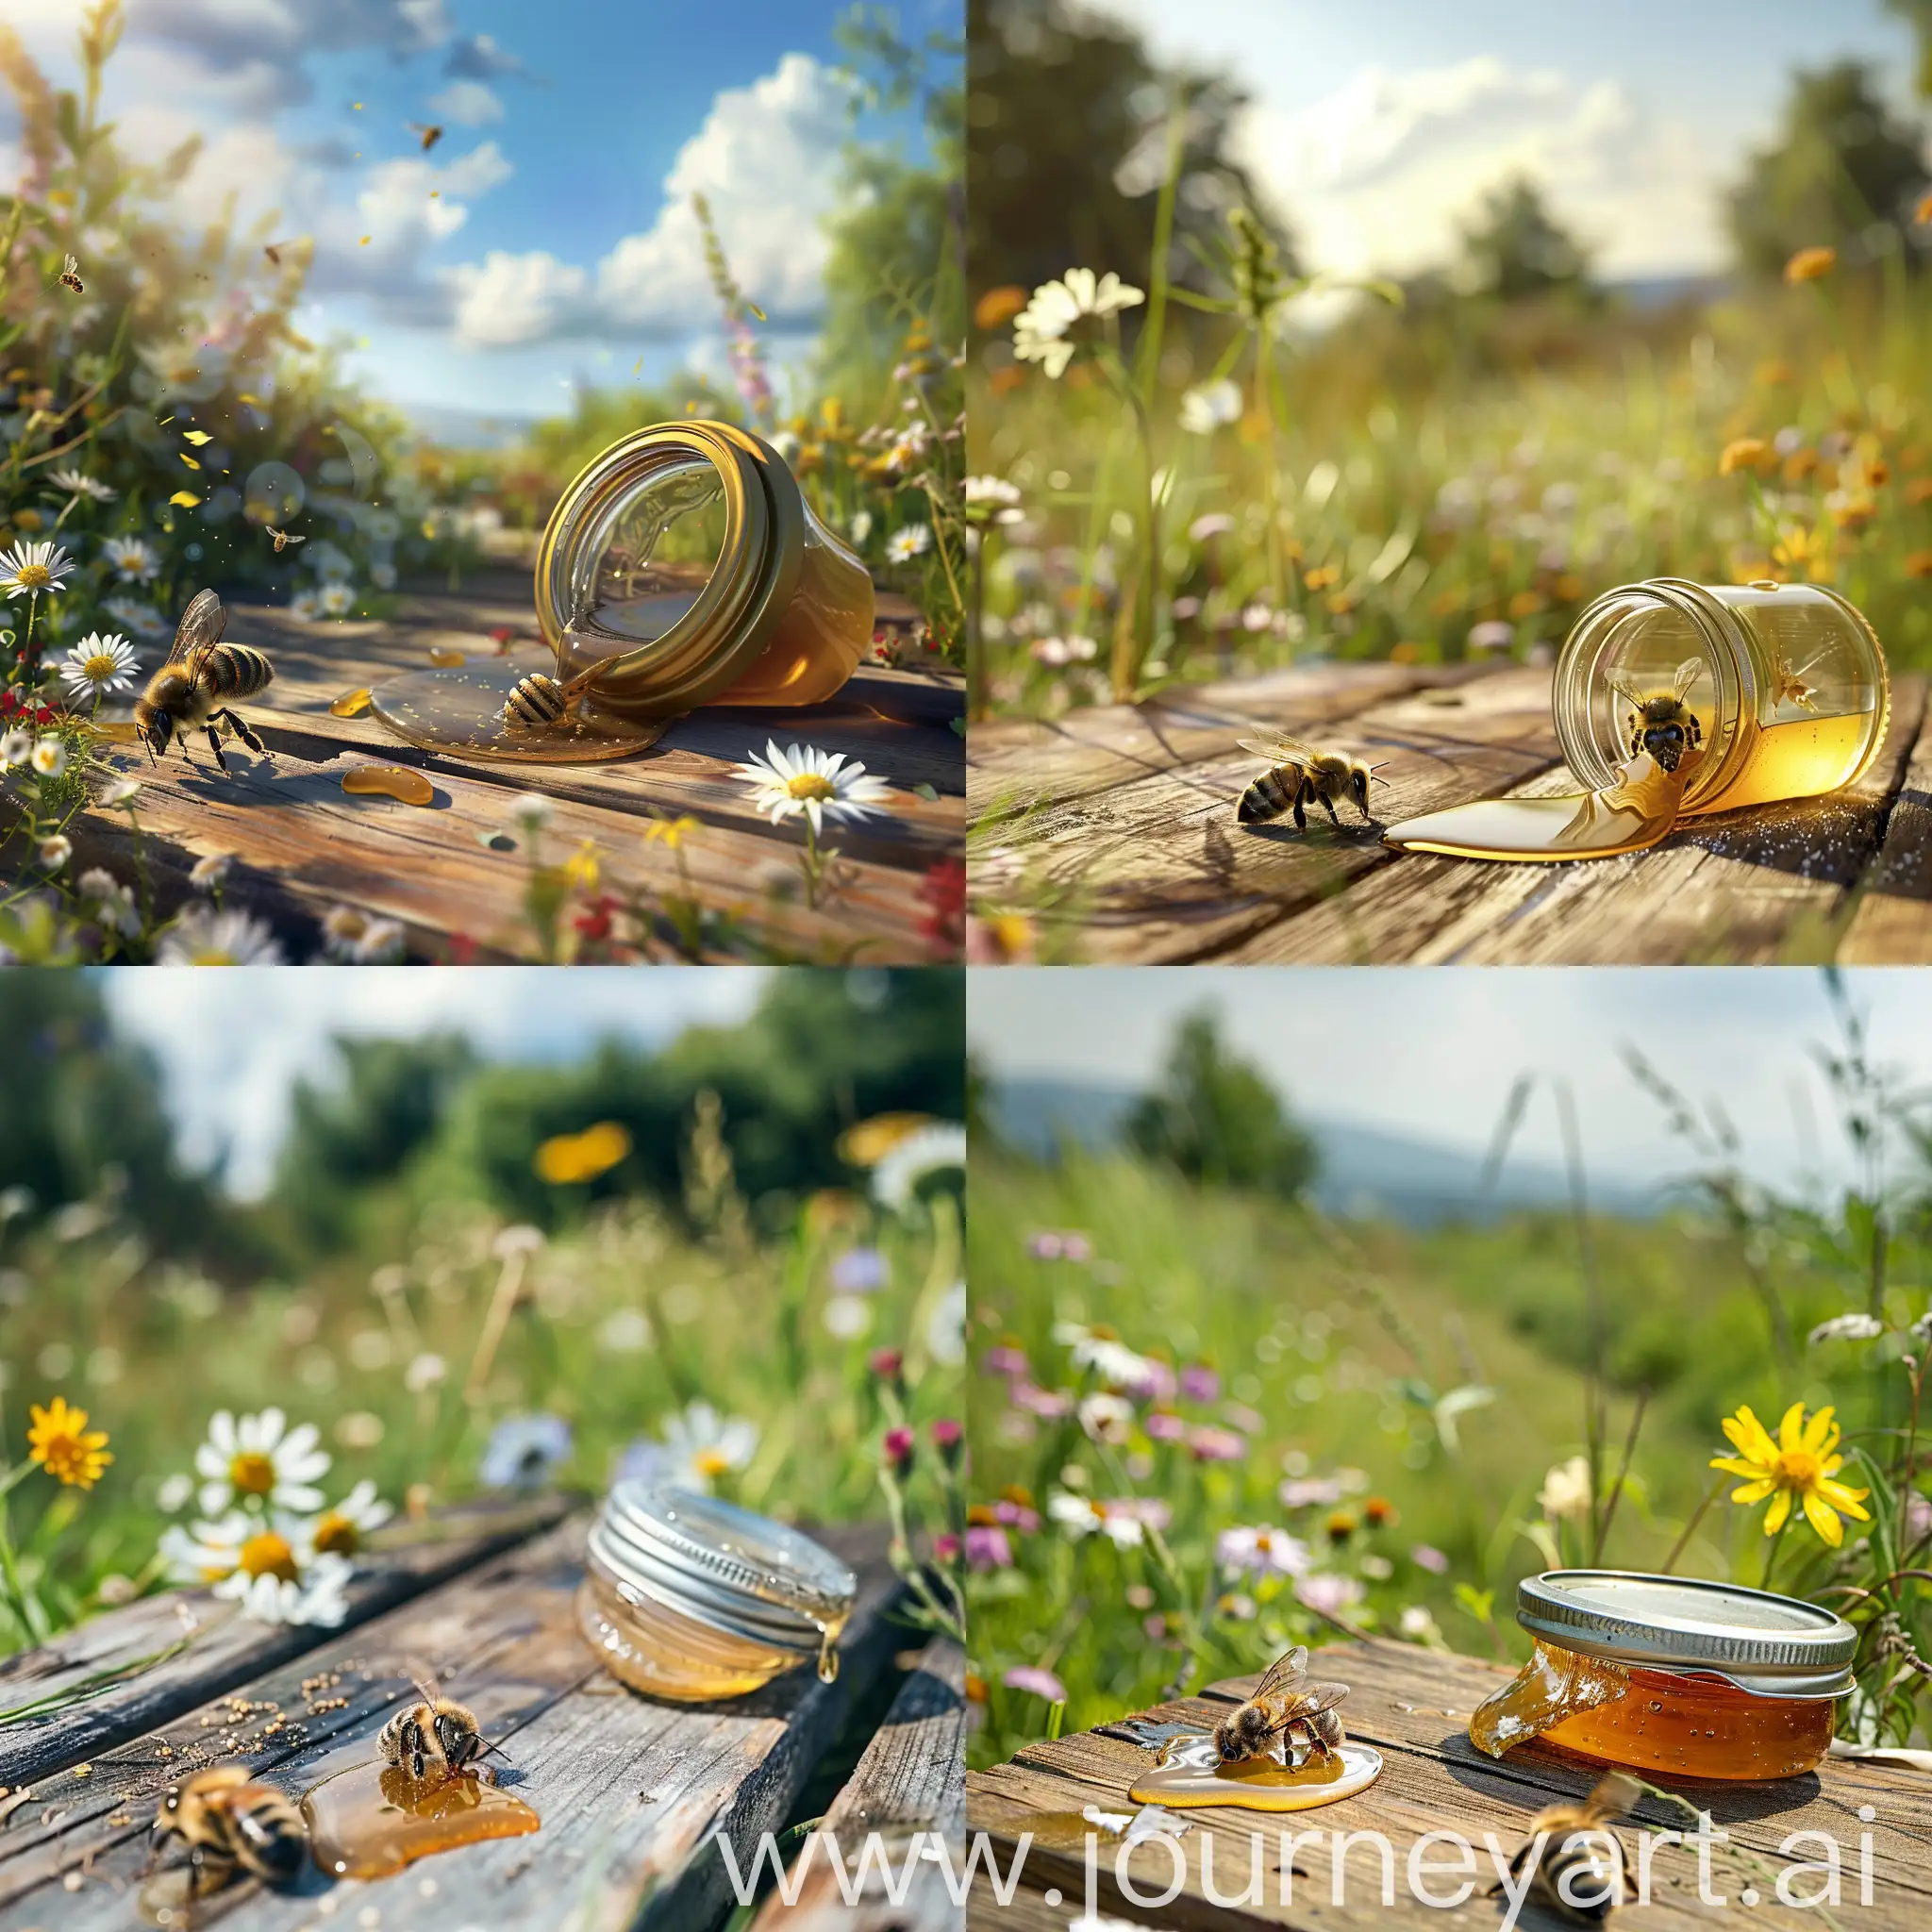 Honeybee-Gathering-Spilled-Honey-on-Meadow-Table